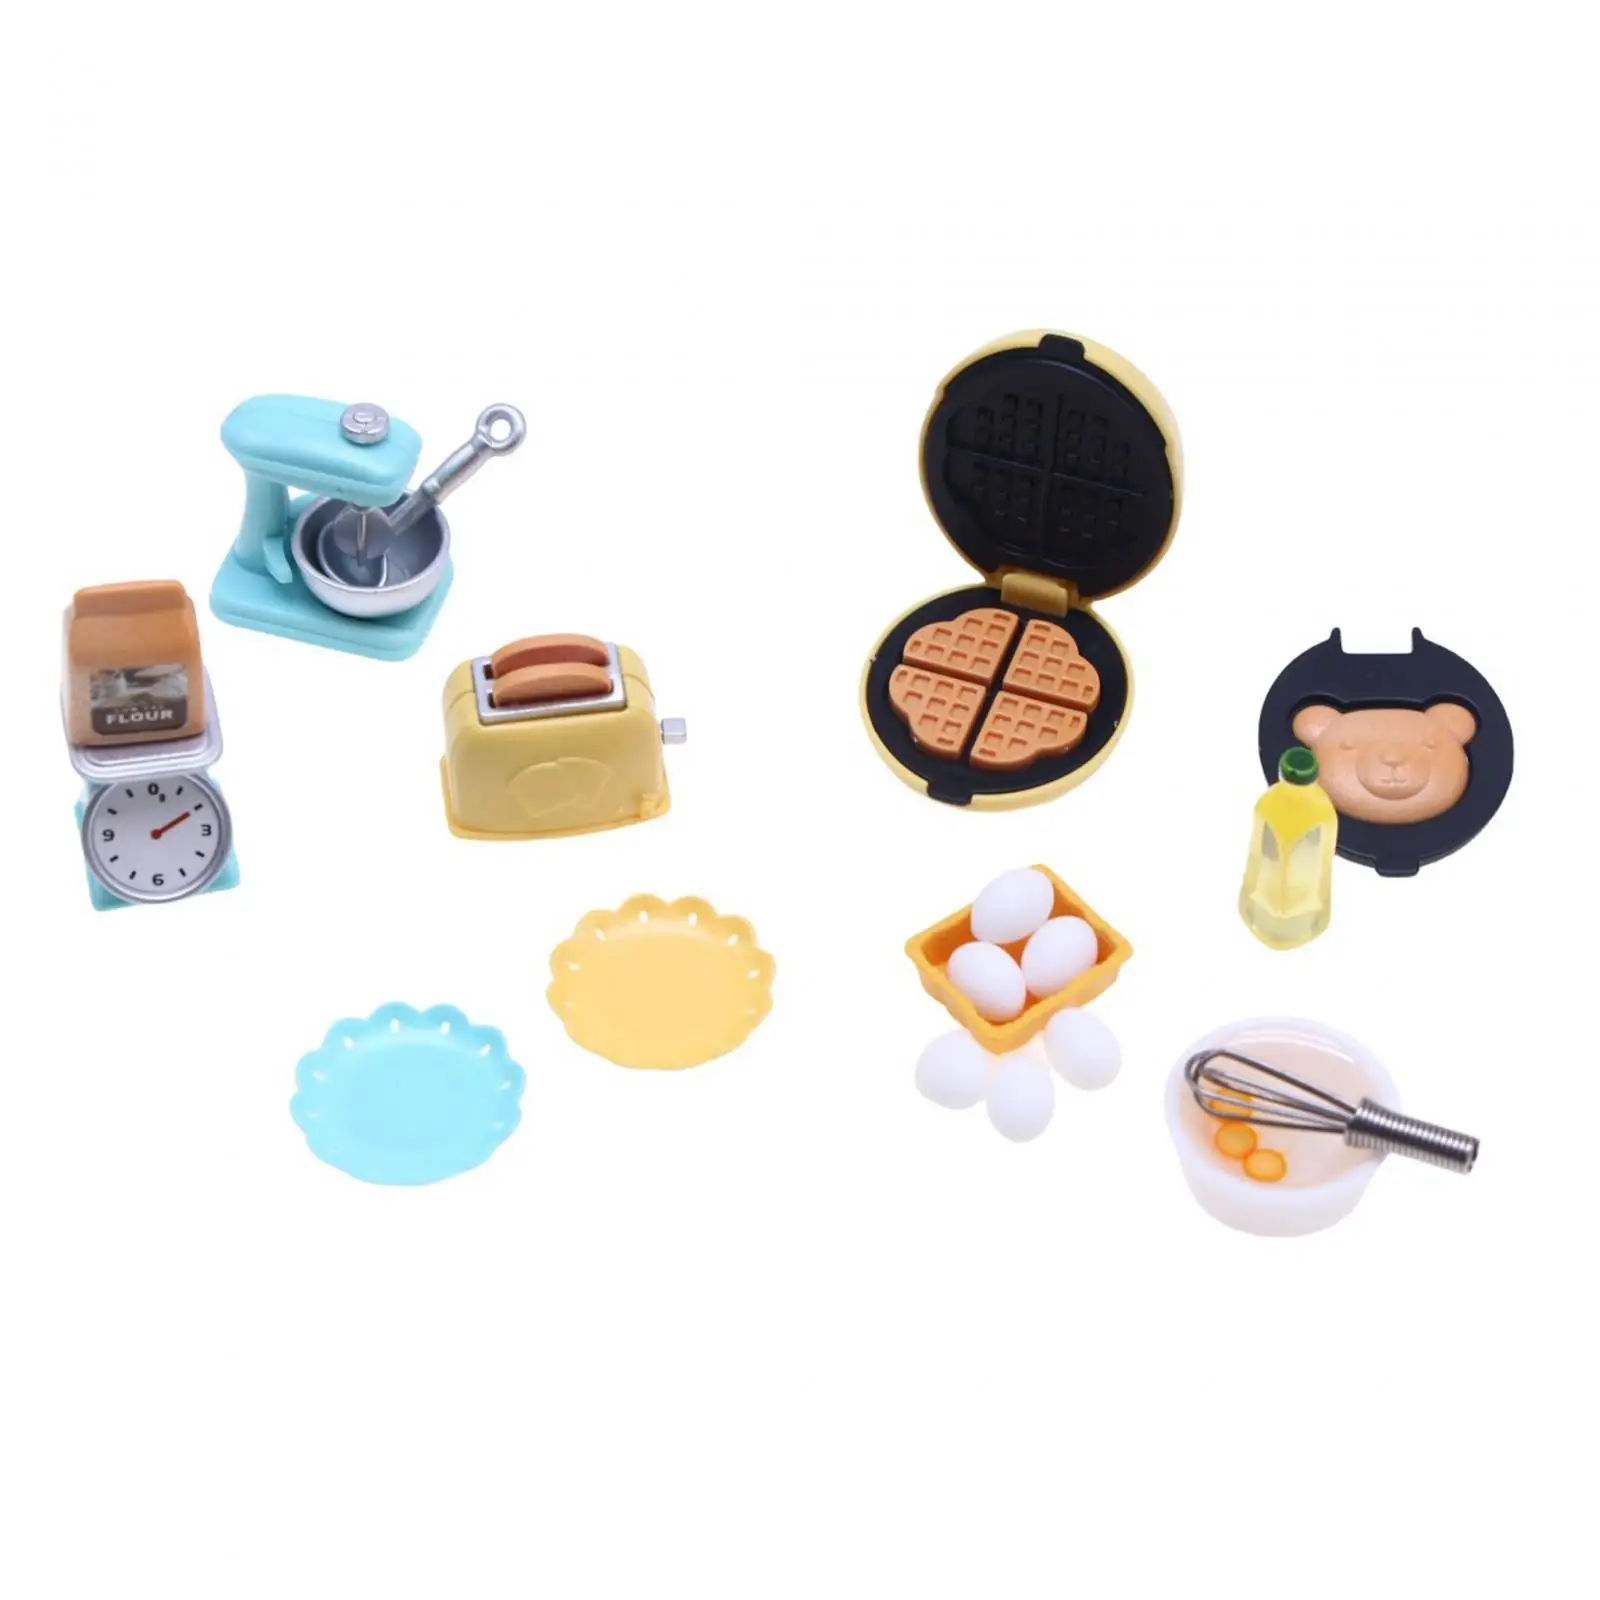 1/12 Miniature Dollhouse Kitchen Set Toasters Mini House Furniture Accessories Kits for Girls Boys Children Kids Birthday Gifts